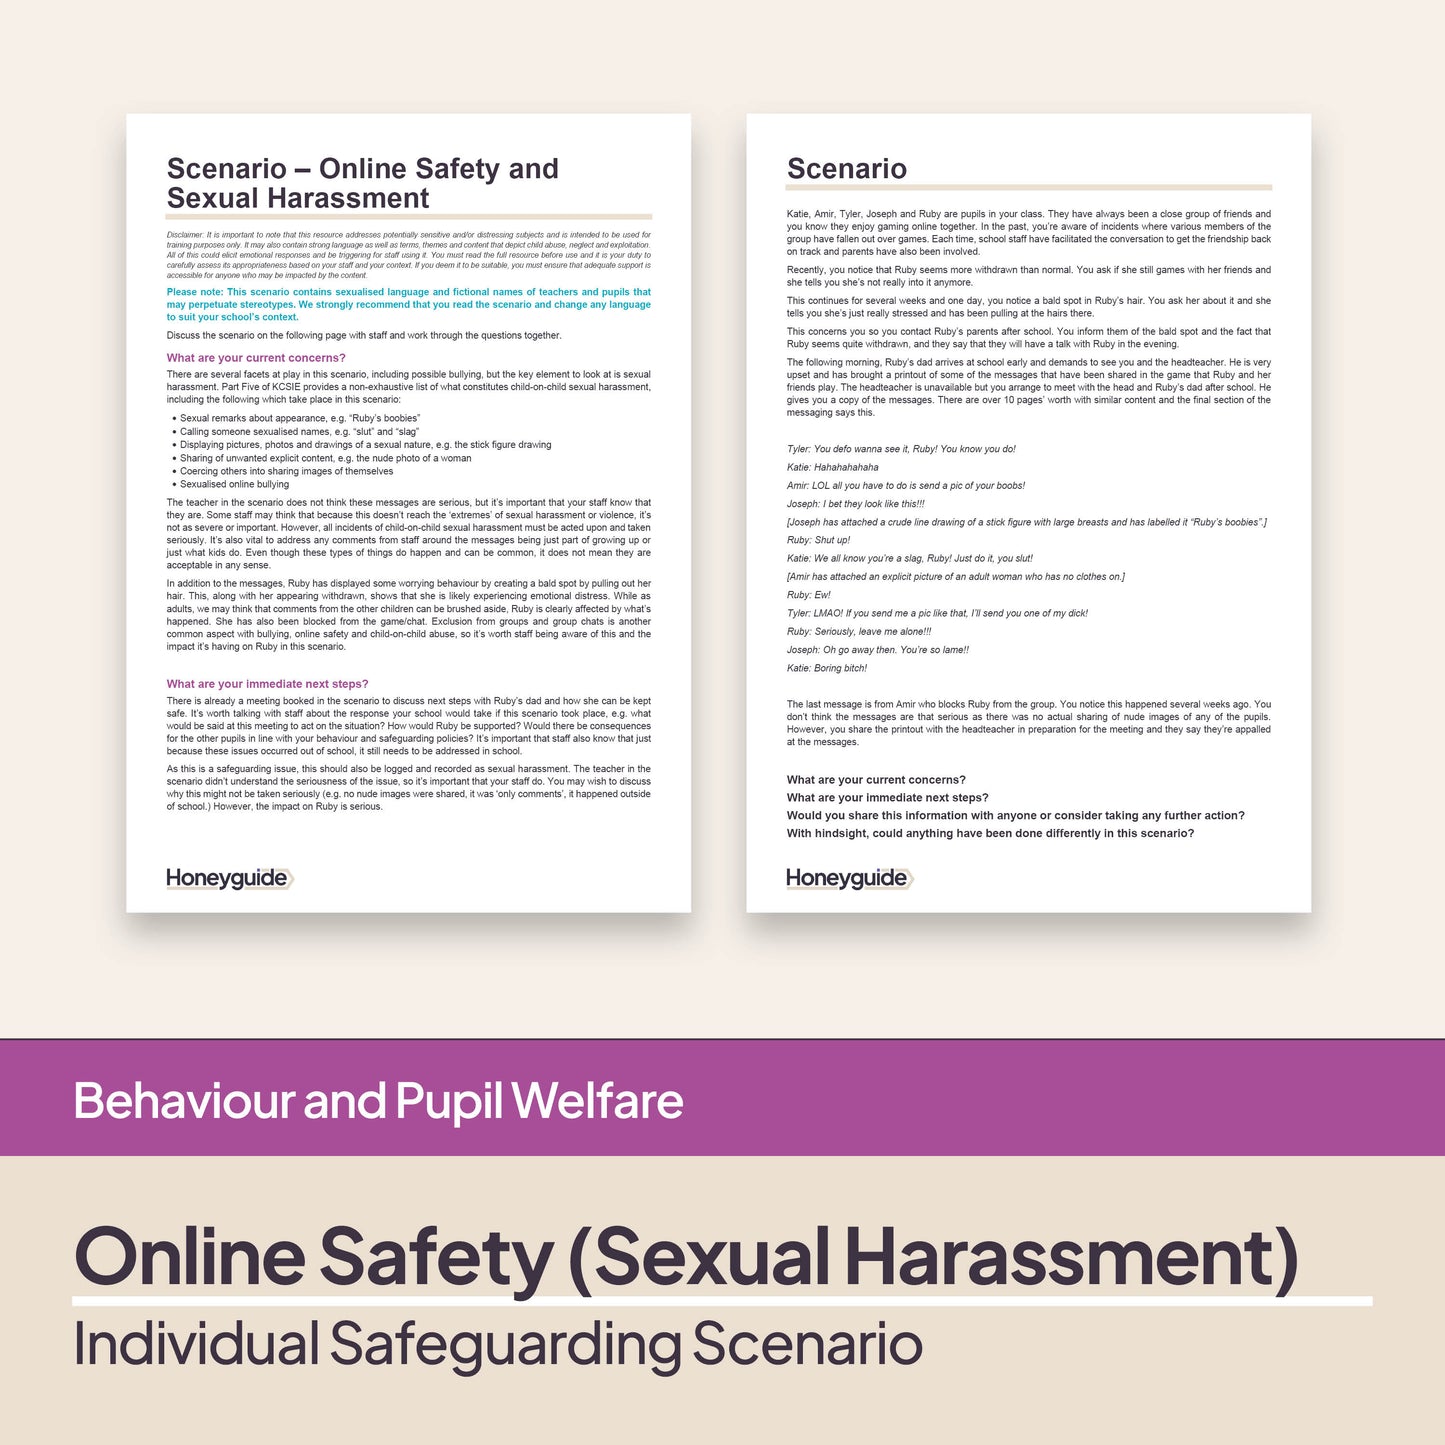 Safeguarding Scenario: Online Safety (Sexual Harassment)